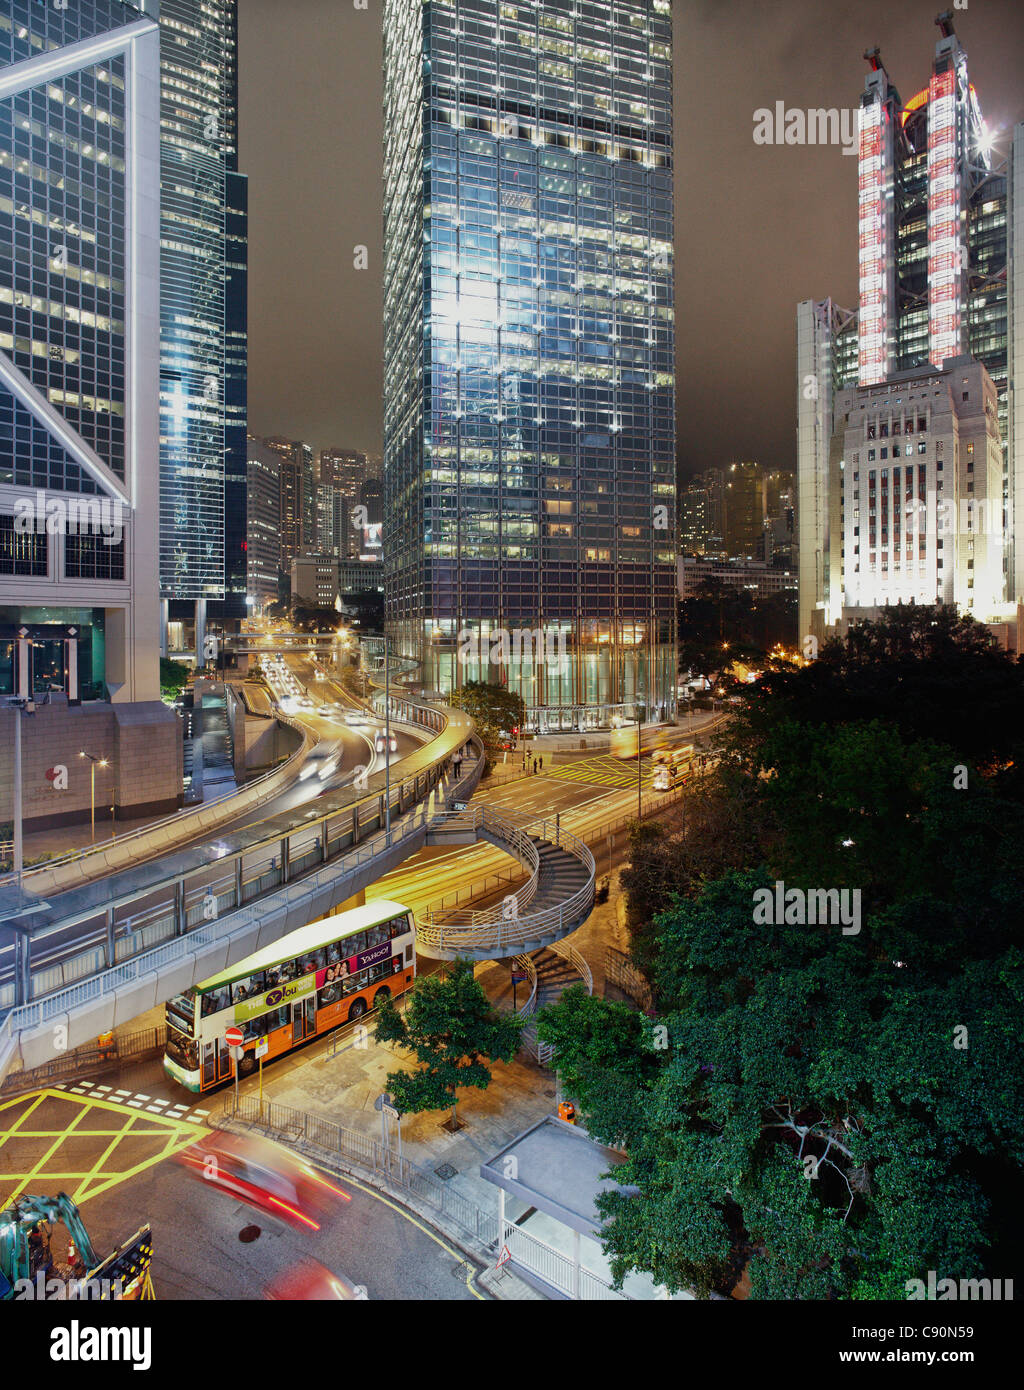 Double-decker bus, Bank of China (l), Cheung Kong Centre (c), HSBC headquarters (r), Queensway, Garden Road at night, Hong Kong, Stock Photo